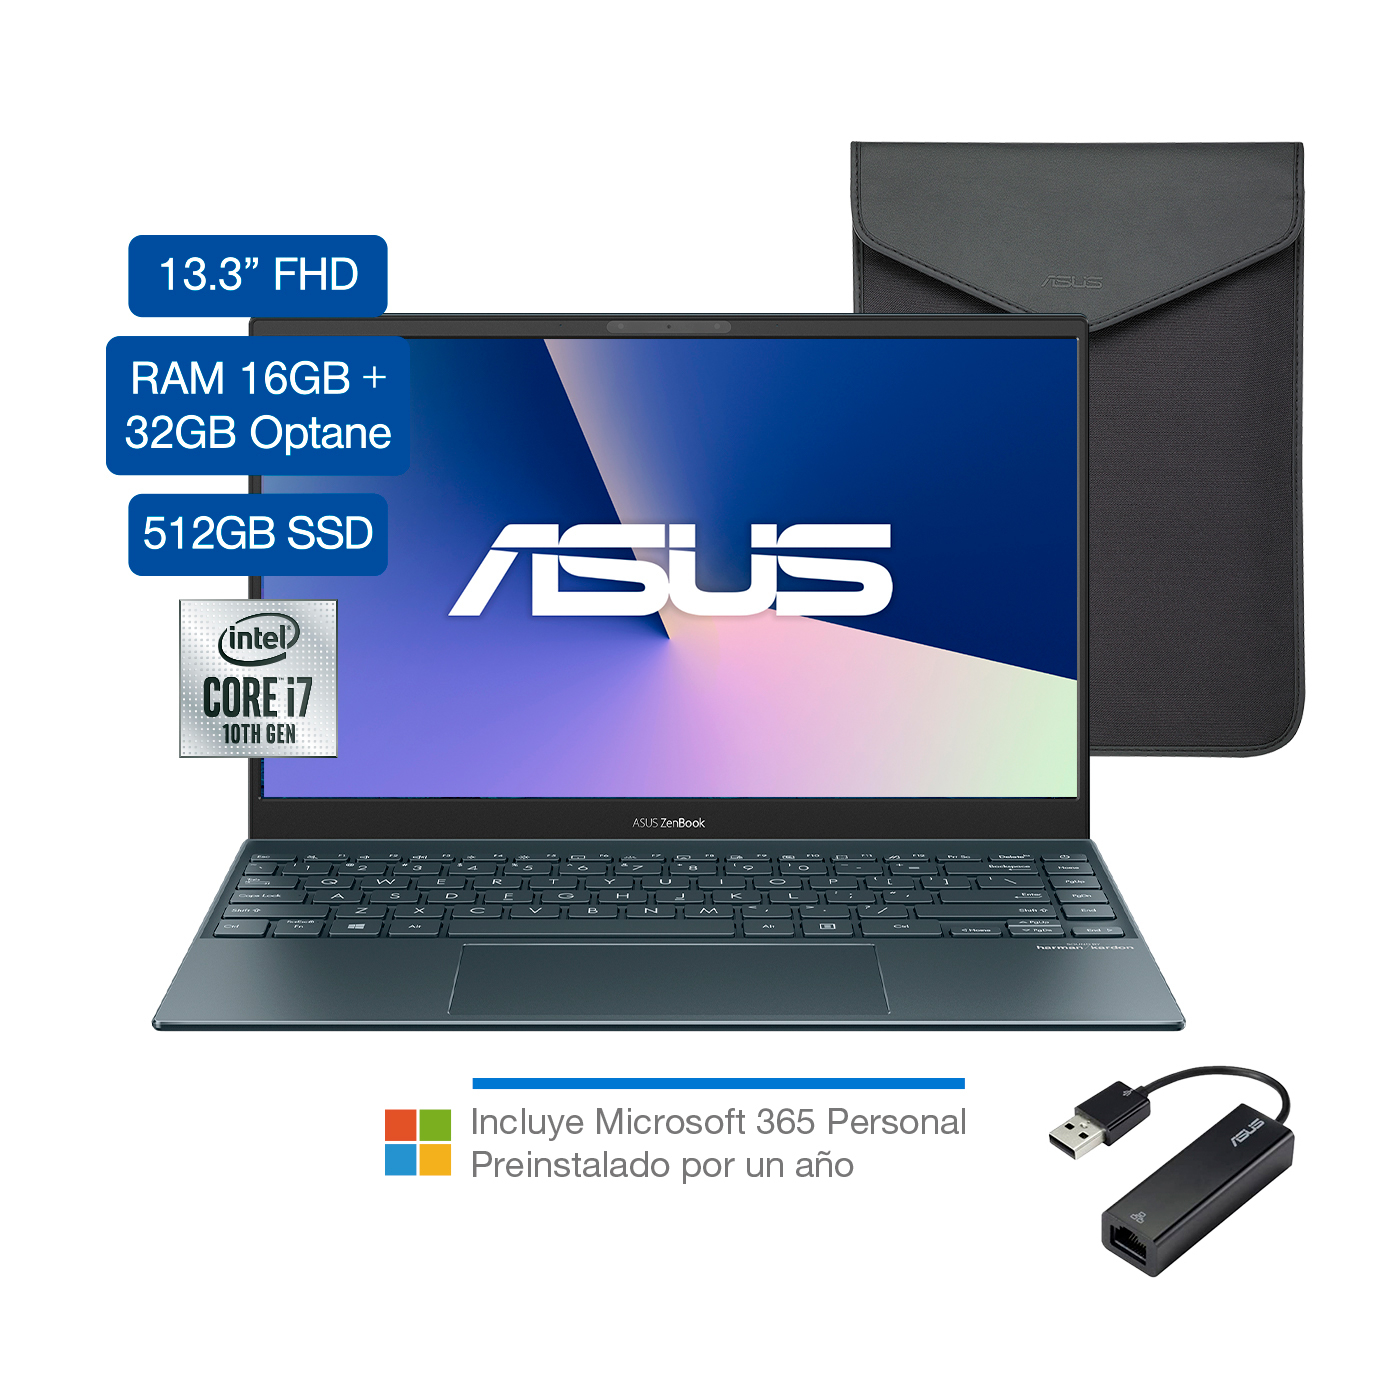 Computador Portátil ASUS ZenBook 13,3" Pulgadas UX325JA Intel Core i7 RAM 16GB + 32GB Intel Optane Disco SSD 512 GB - Gris